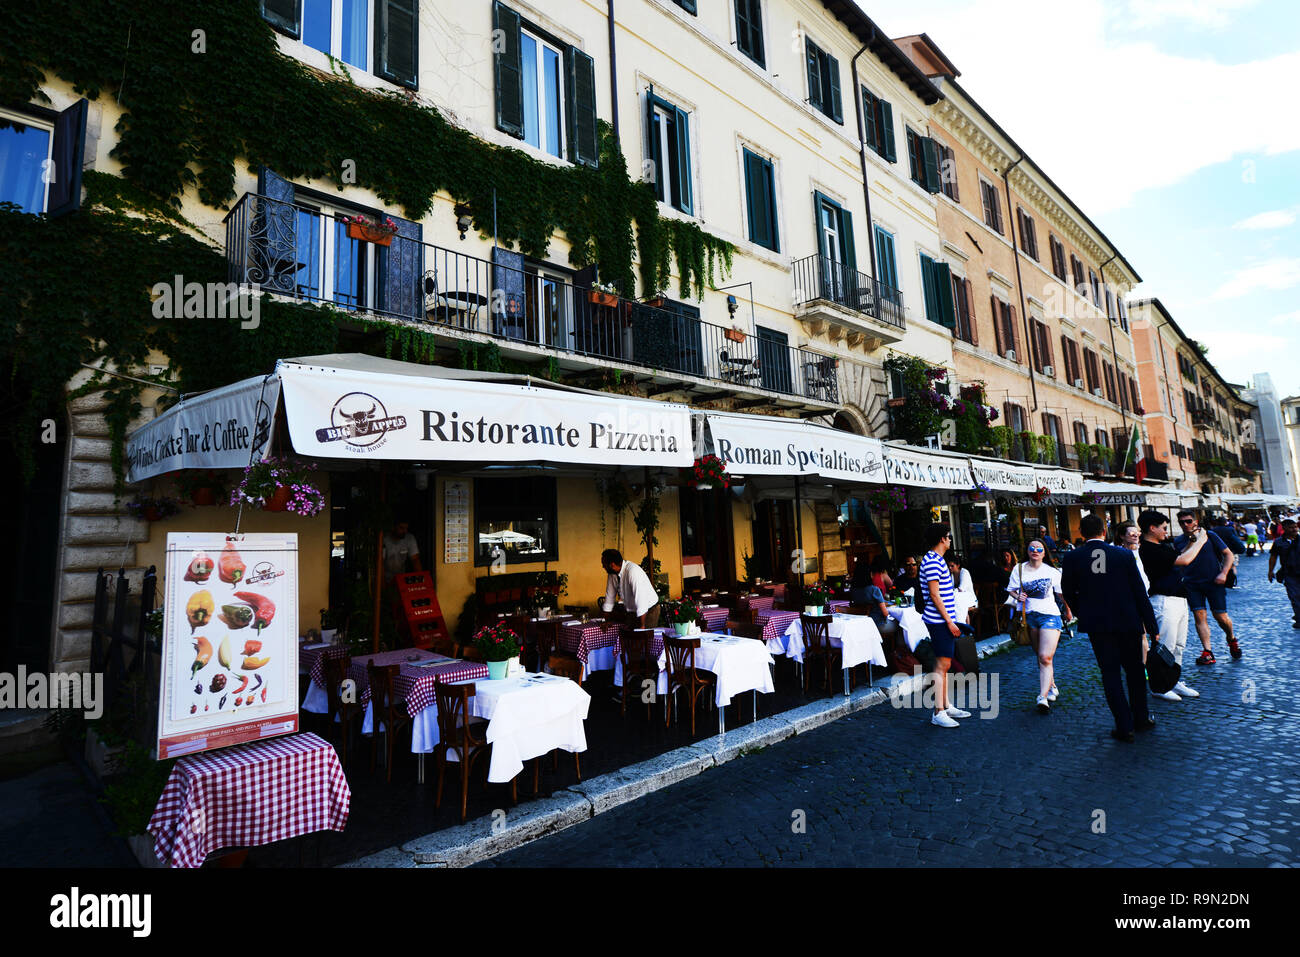 Restaurants in PIazza Navona, Rome. Stock Photo